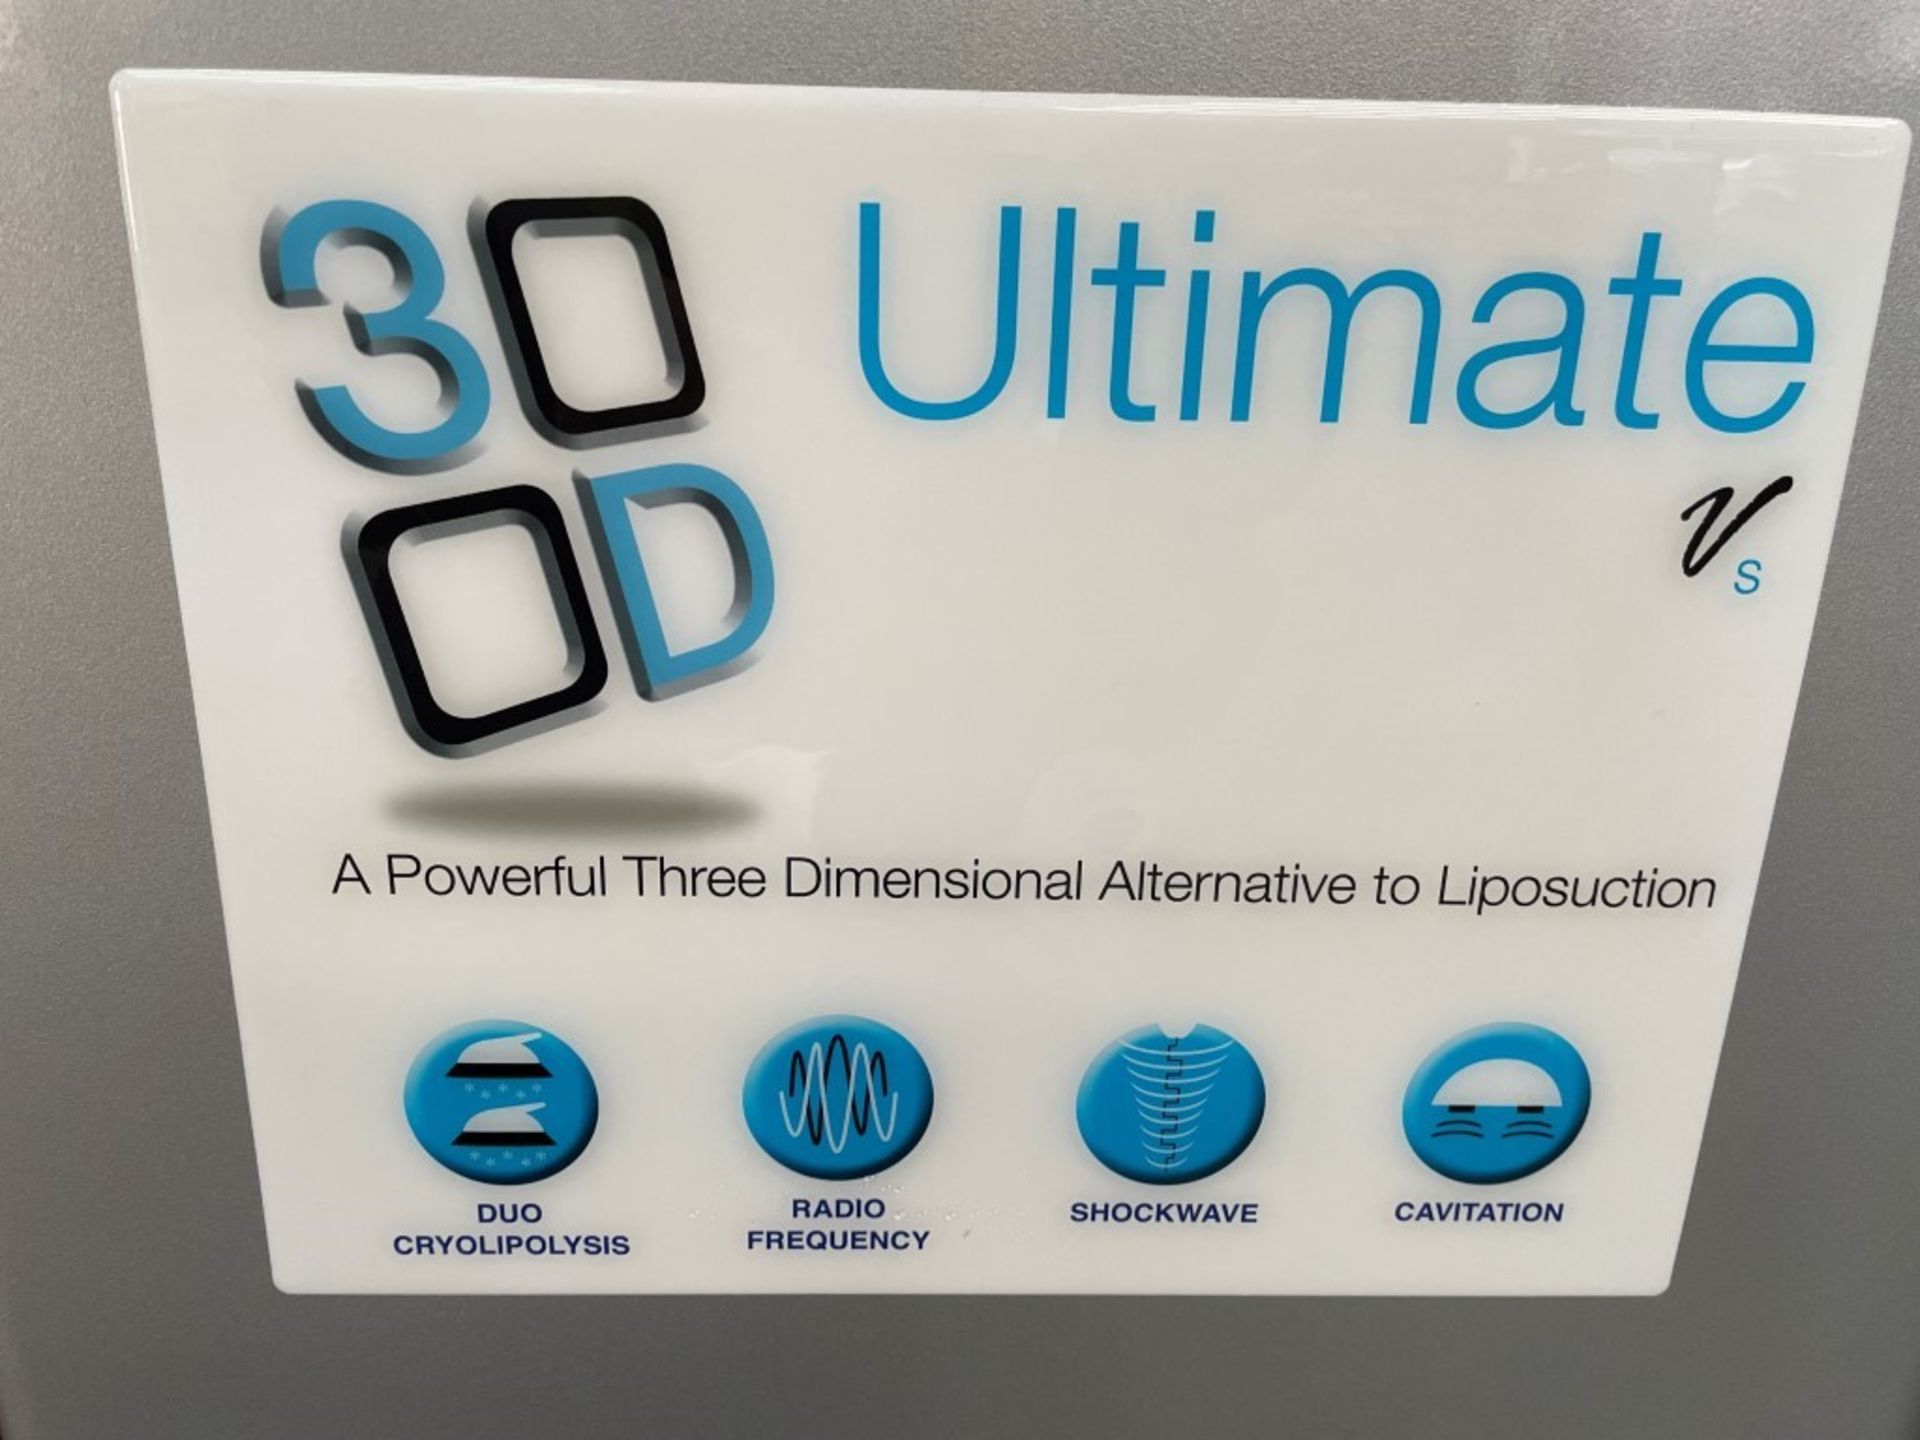 3D-Lipo 3D Ultimate Vs Shockwave Lipsuction Alternative, Cryolipolysis, Cavitation & RF Machine - Image 8 of 11